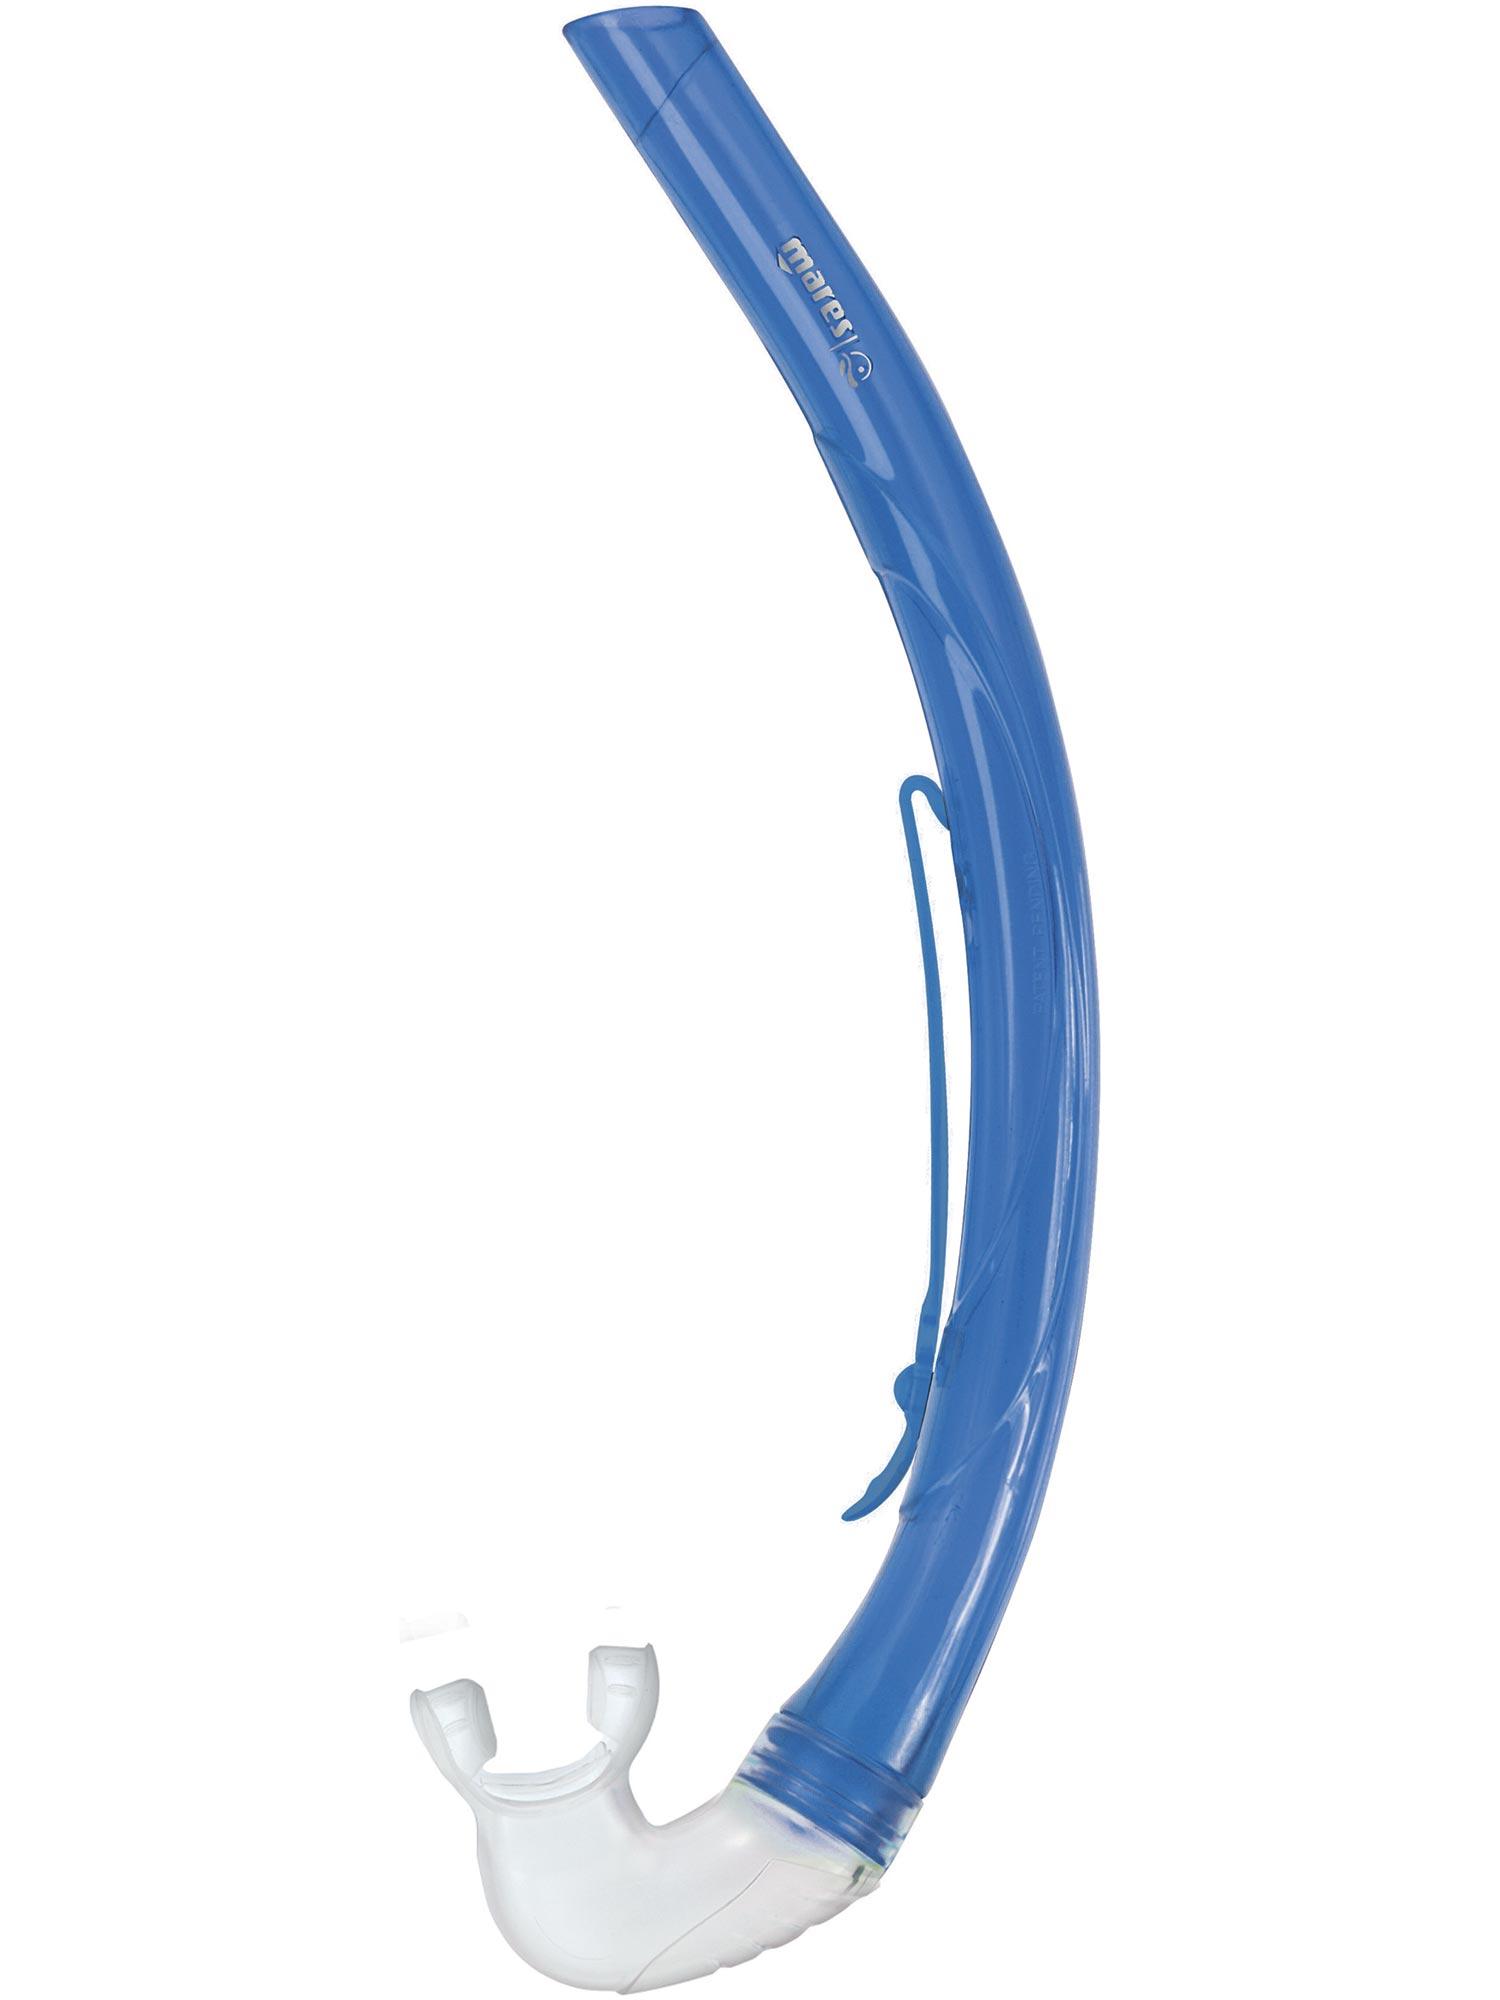 Selected image for MARES Dečija disaljka za ronjenje Mini Rudder plava